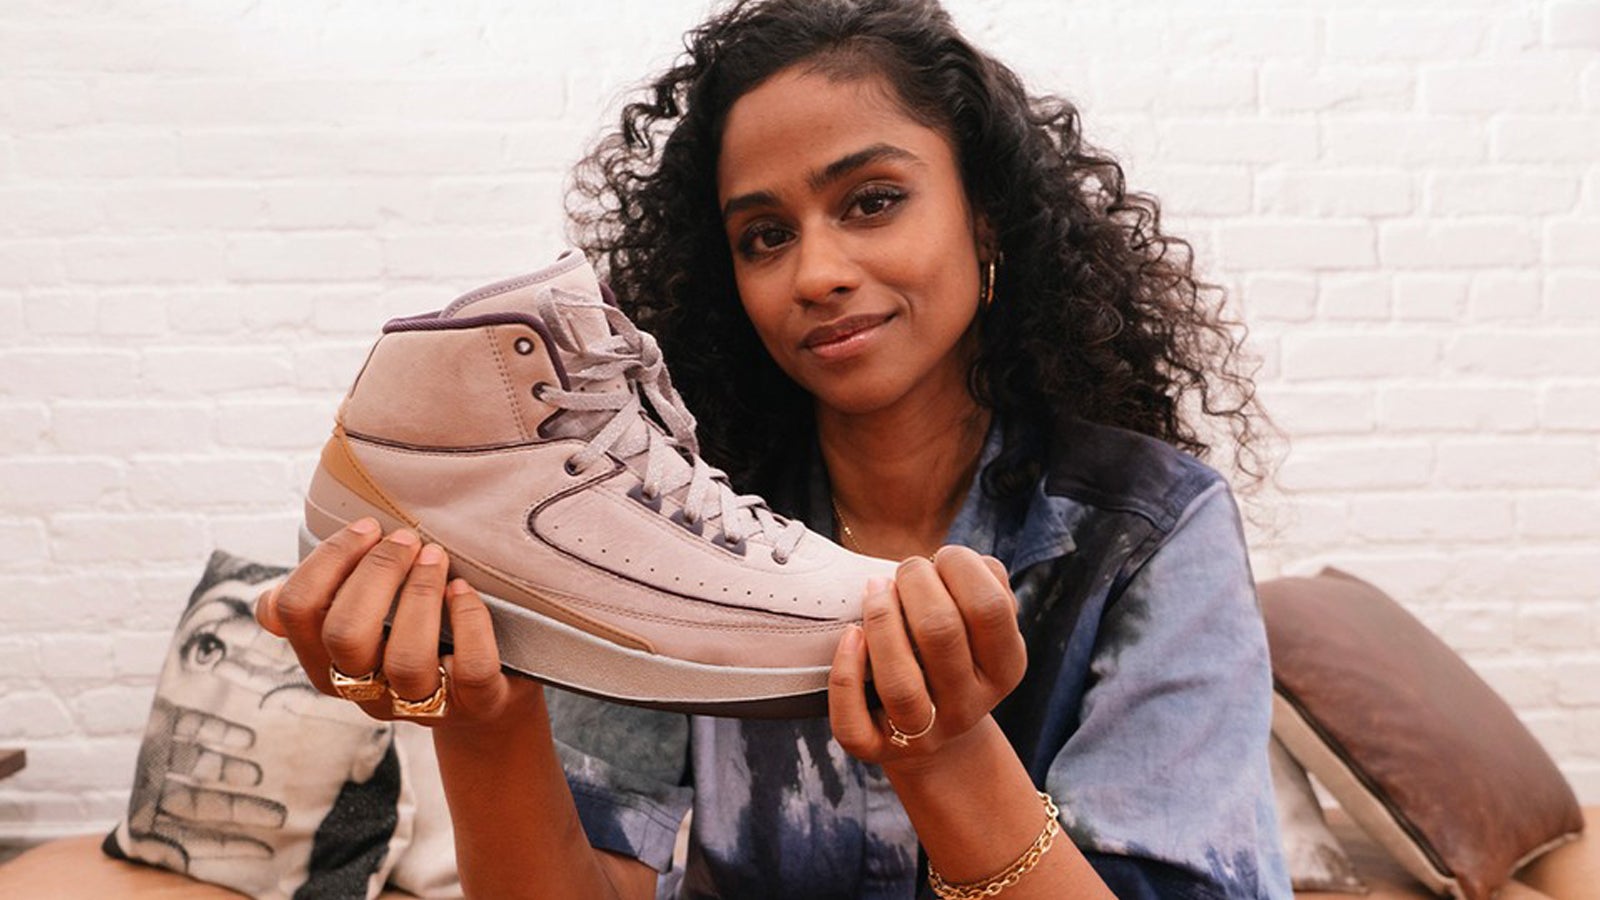 Vashtie Kola On Inclusion Of Women In The Sneaker Community: 'The Community Has Evolved'